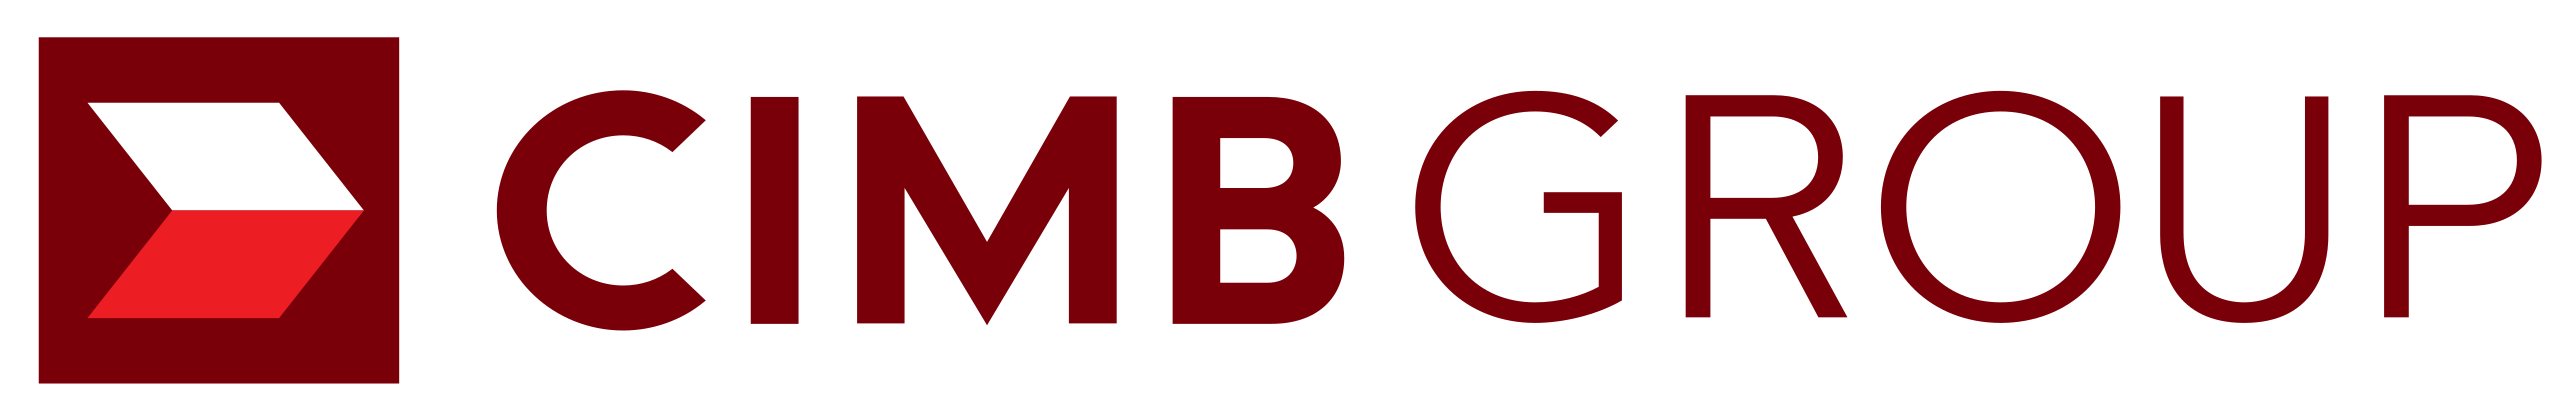 CIMB Group Brand Logo